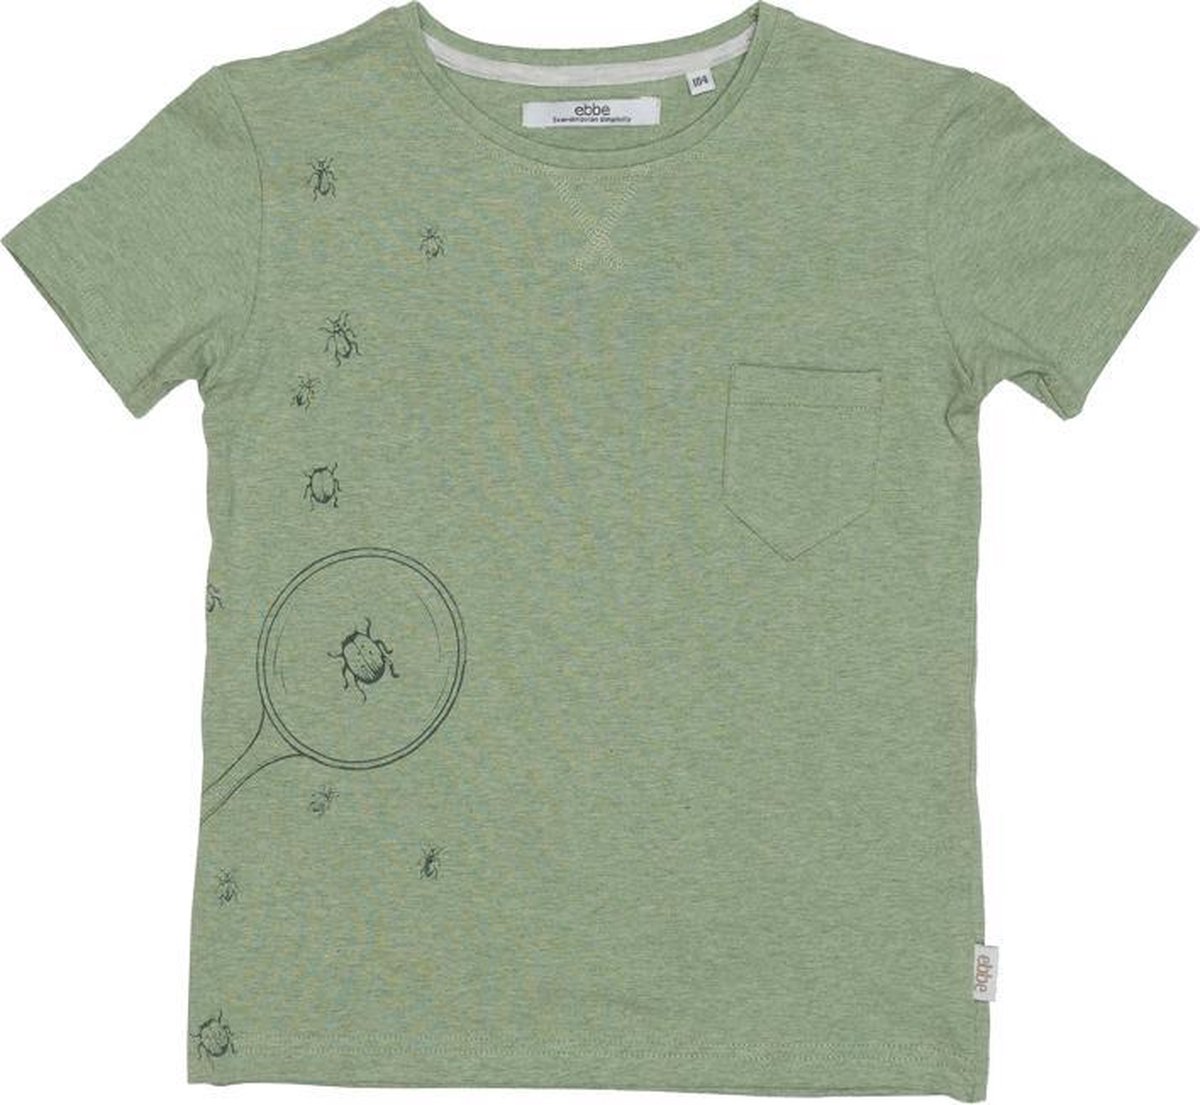 Ebbe - jongens T-shirt - Pastel green melange - Maat 140